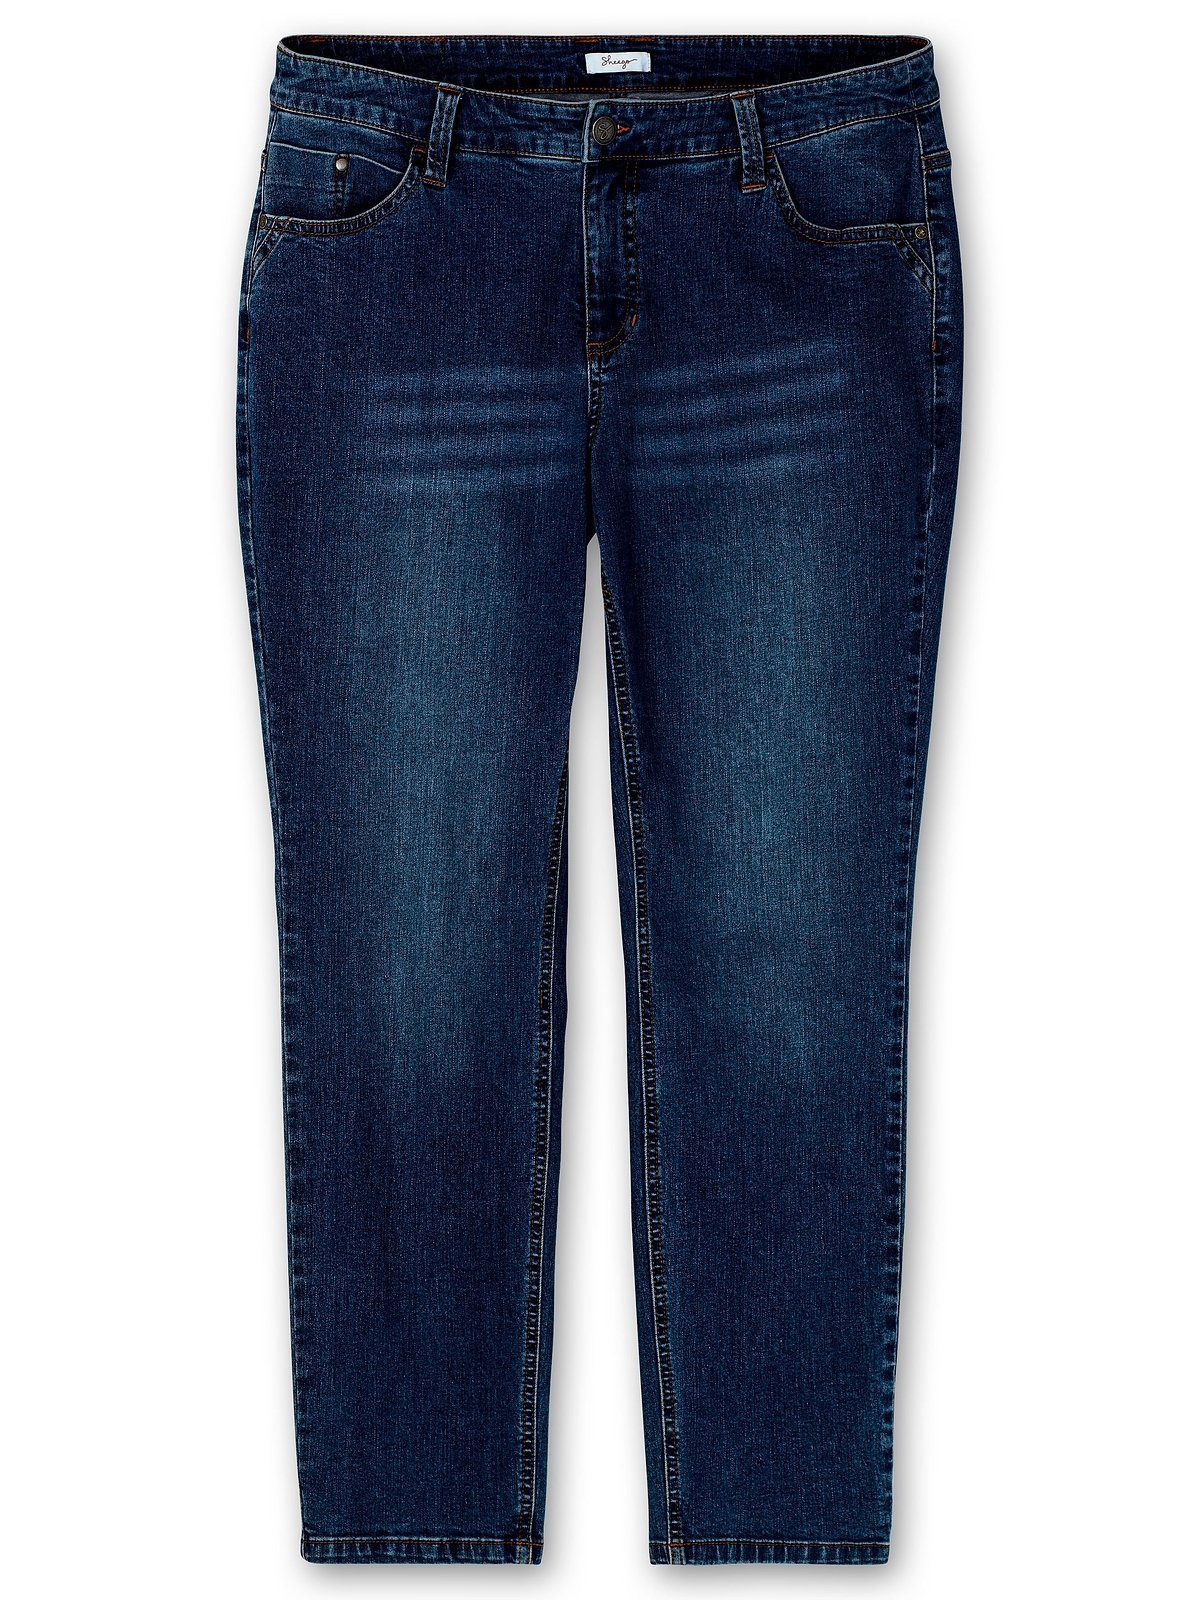 Sheego Stretch-Jeans Große Größen Denim Five-Pocket-Stil dark blue im